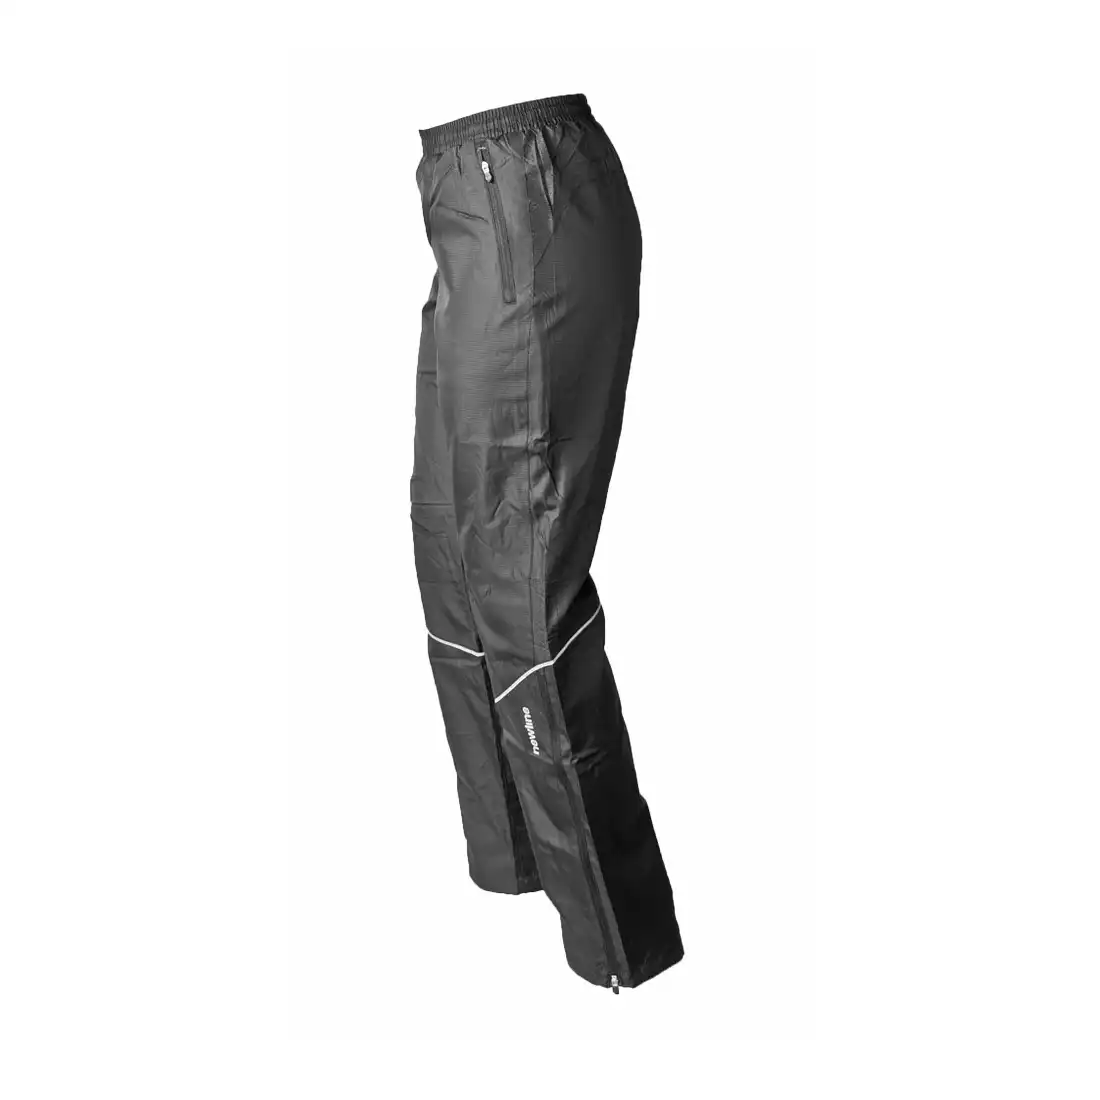 NEWLINE PERFORM THERMAL PANTS - damskie spodnie do biegania 10046-060